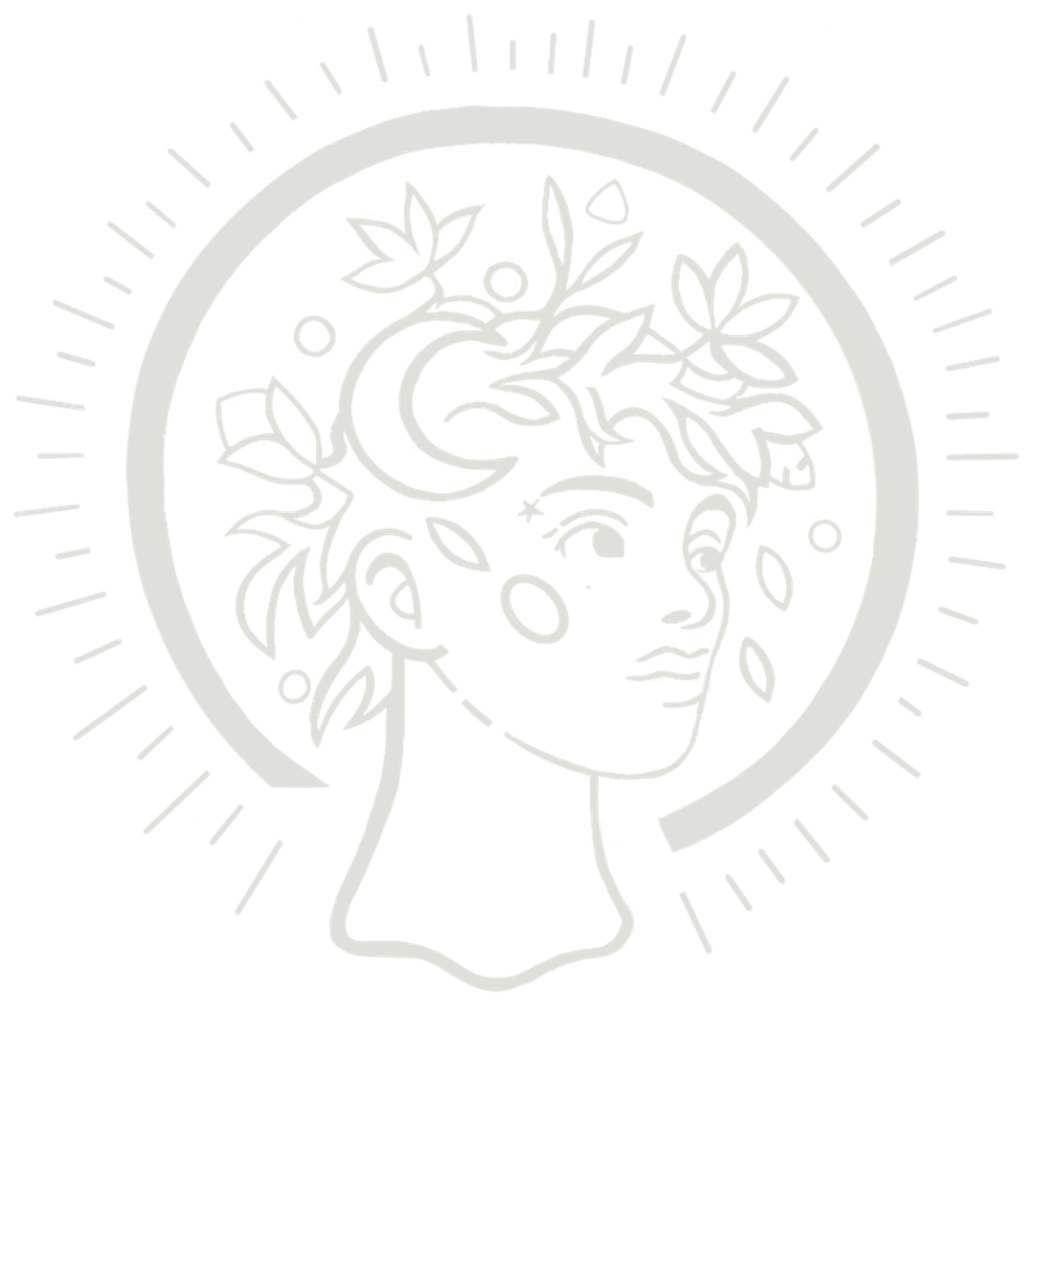 UndocumentedStudent.com